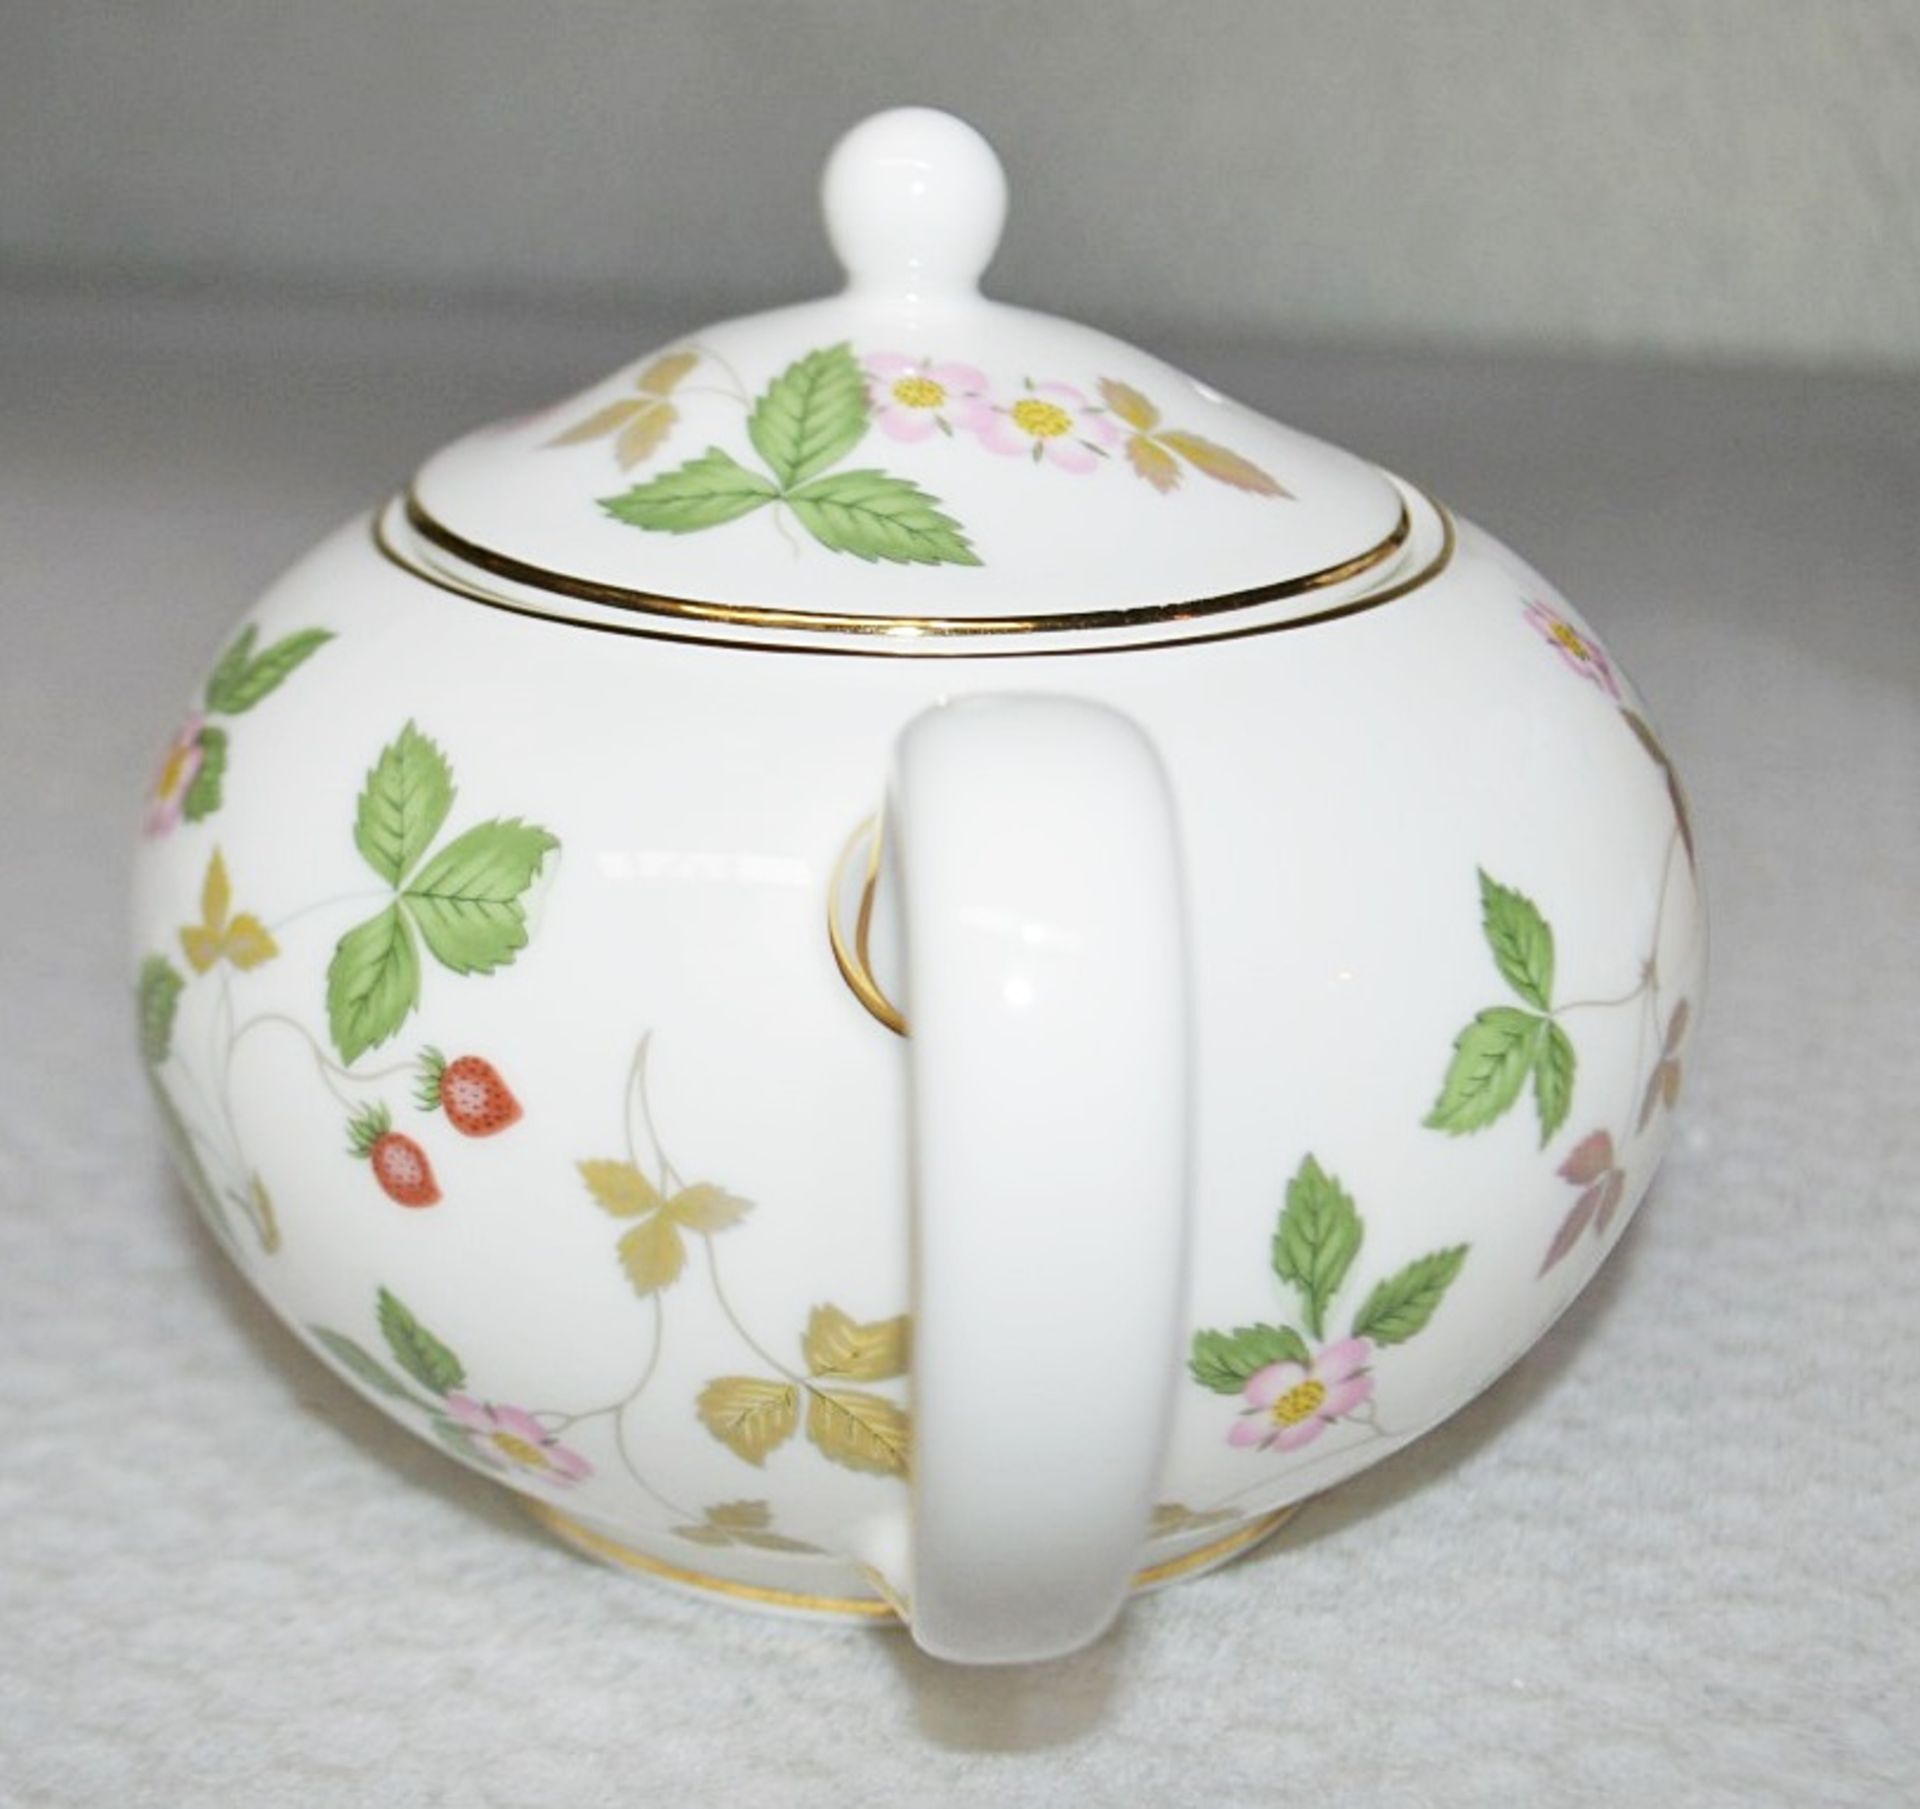 1 x WEDGWOOD Small Wild Strawberry Teapot Featuring A 22-Karat Gold Rim - Read Full Description - Image 7 of 8